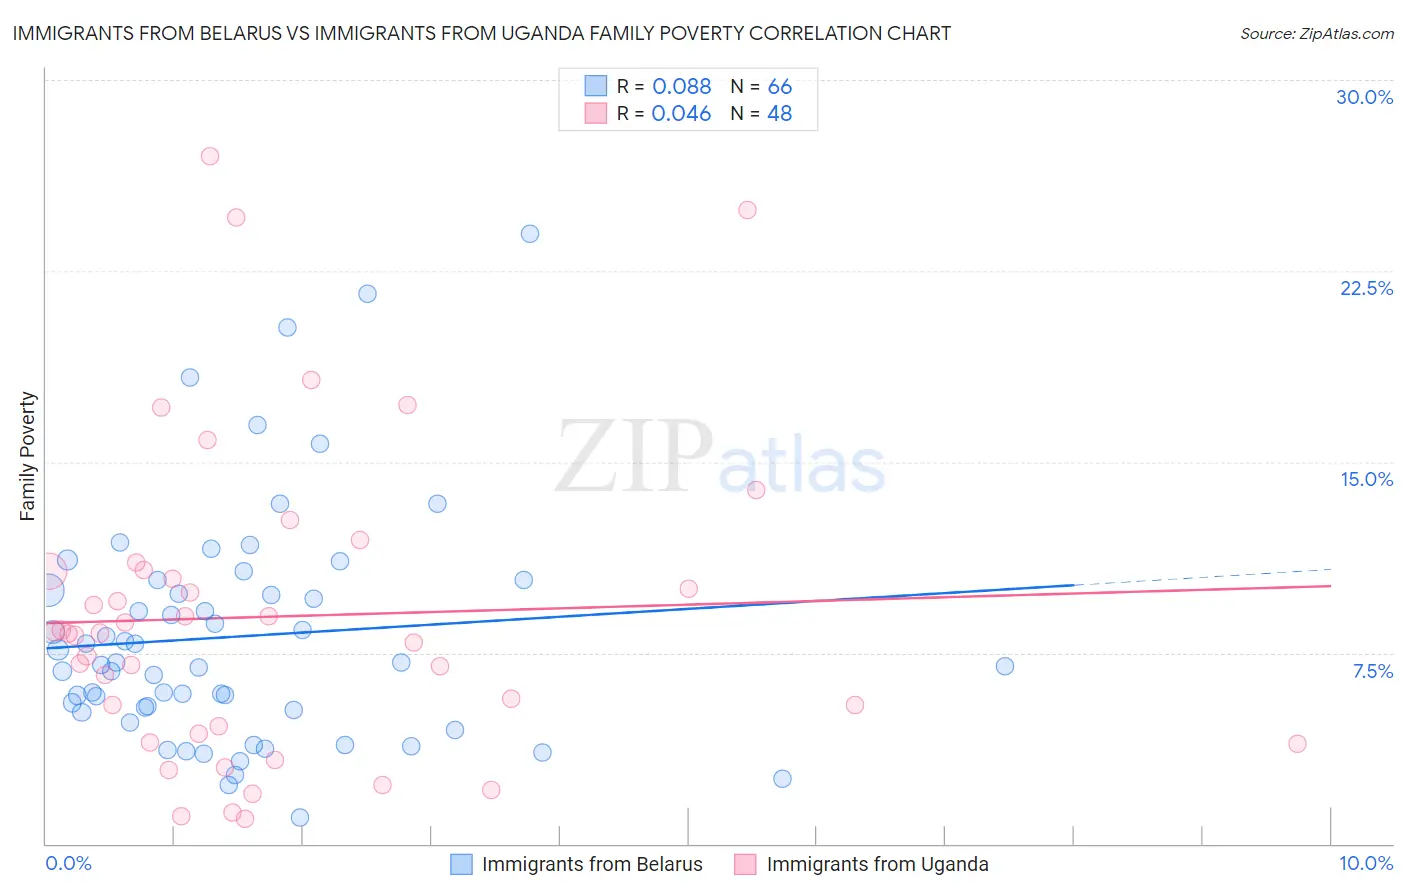 Immigrants from Belarus vs Immigrants from Uganda Family Poverty